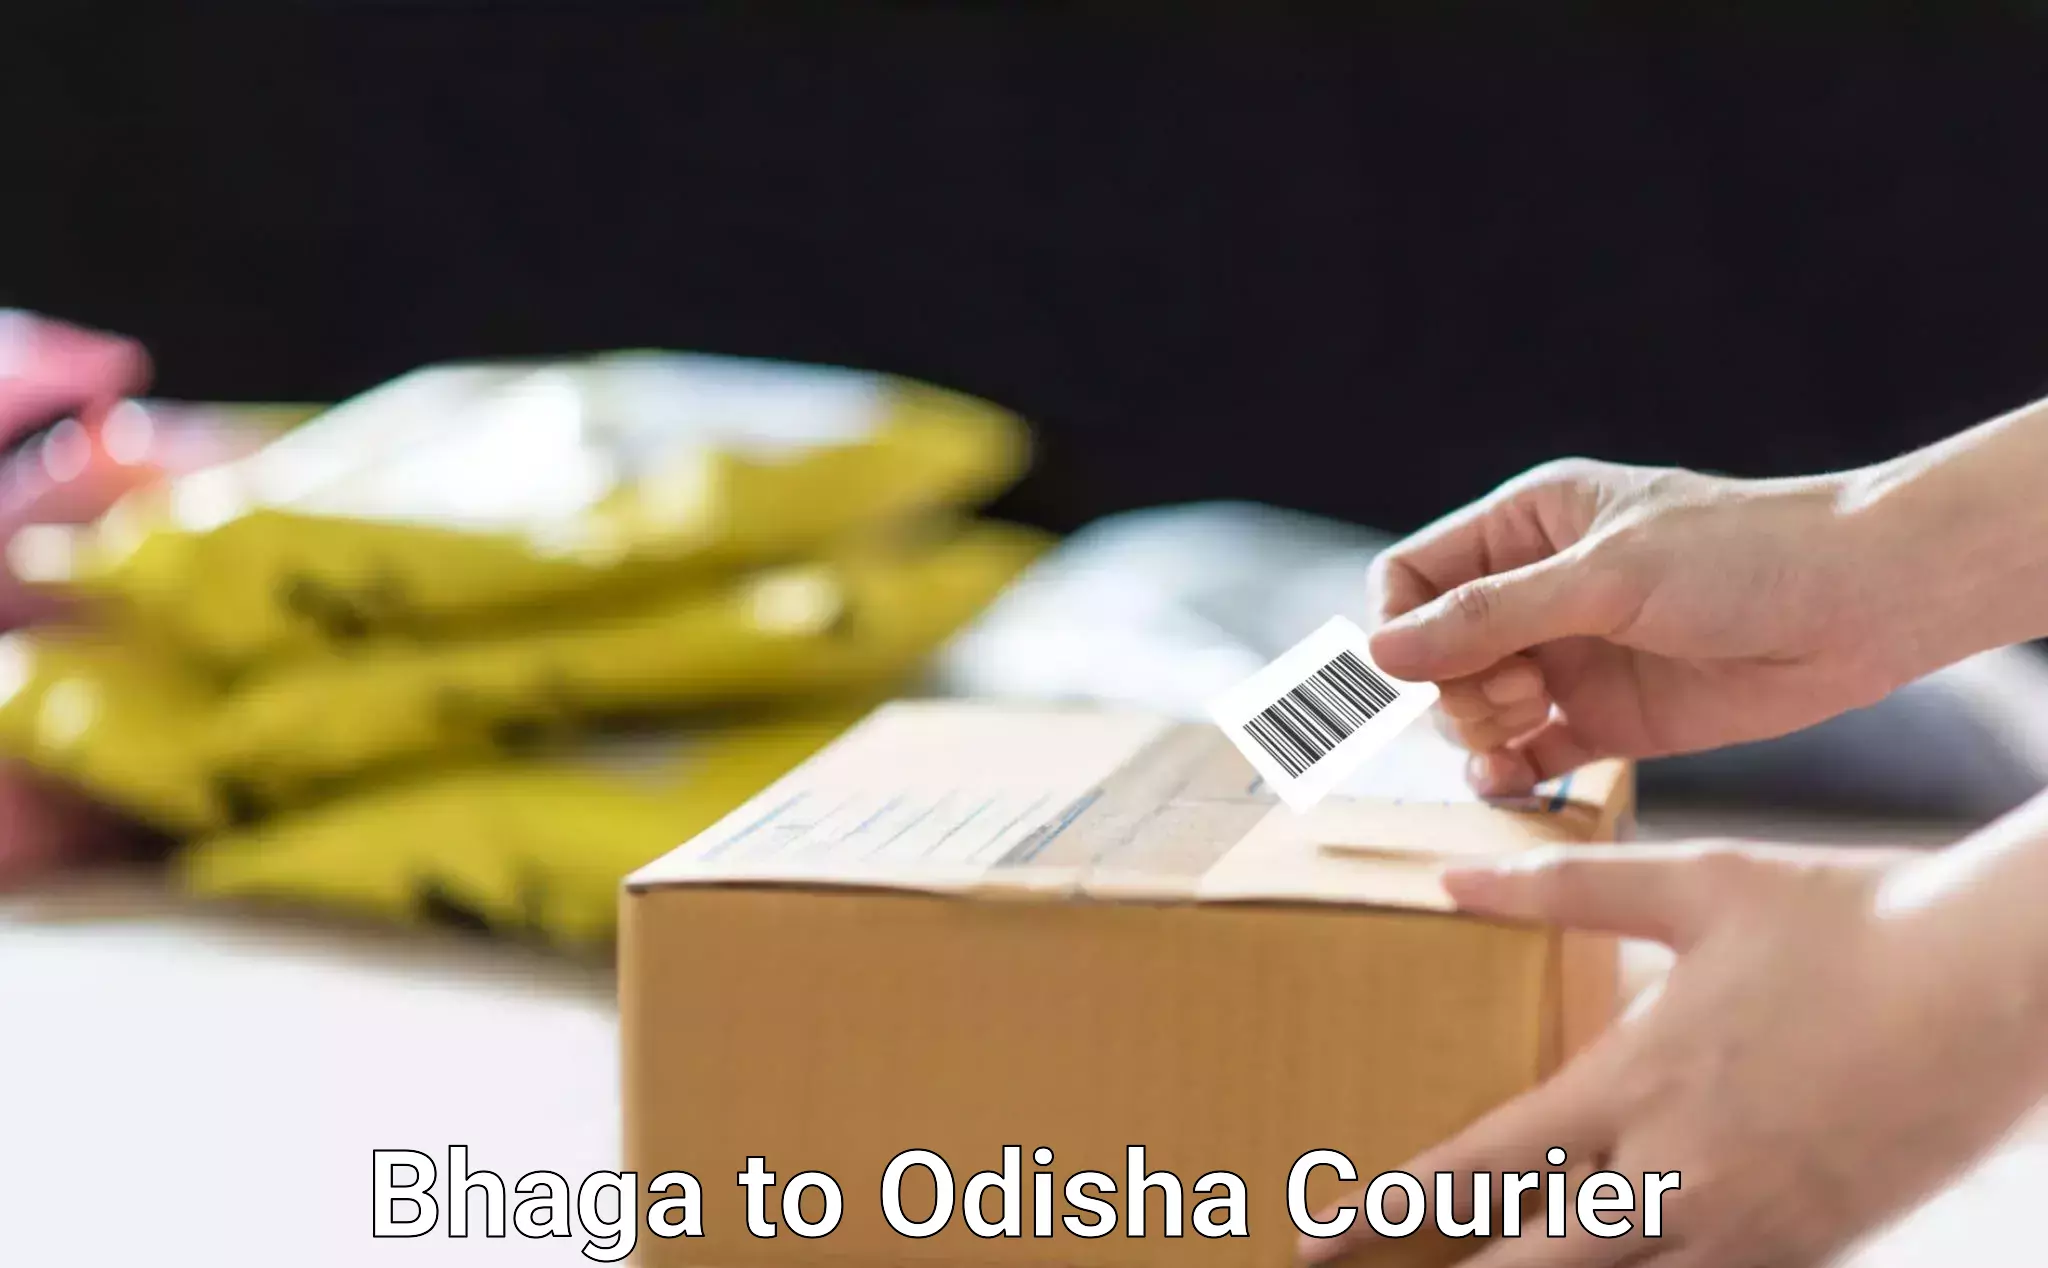 Customer-centric shipping Bhaga to Mangalpur